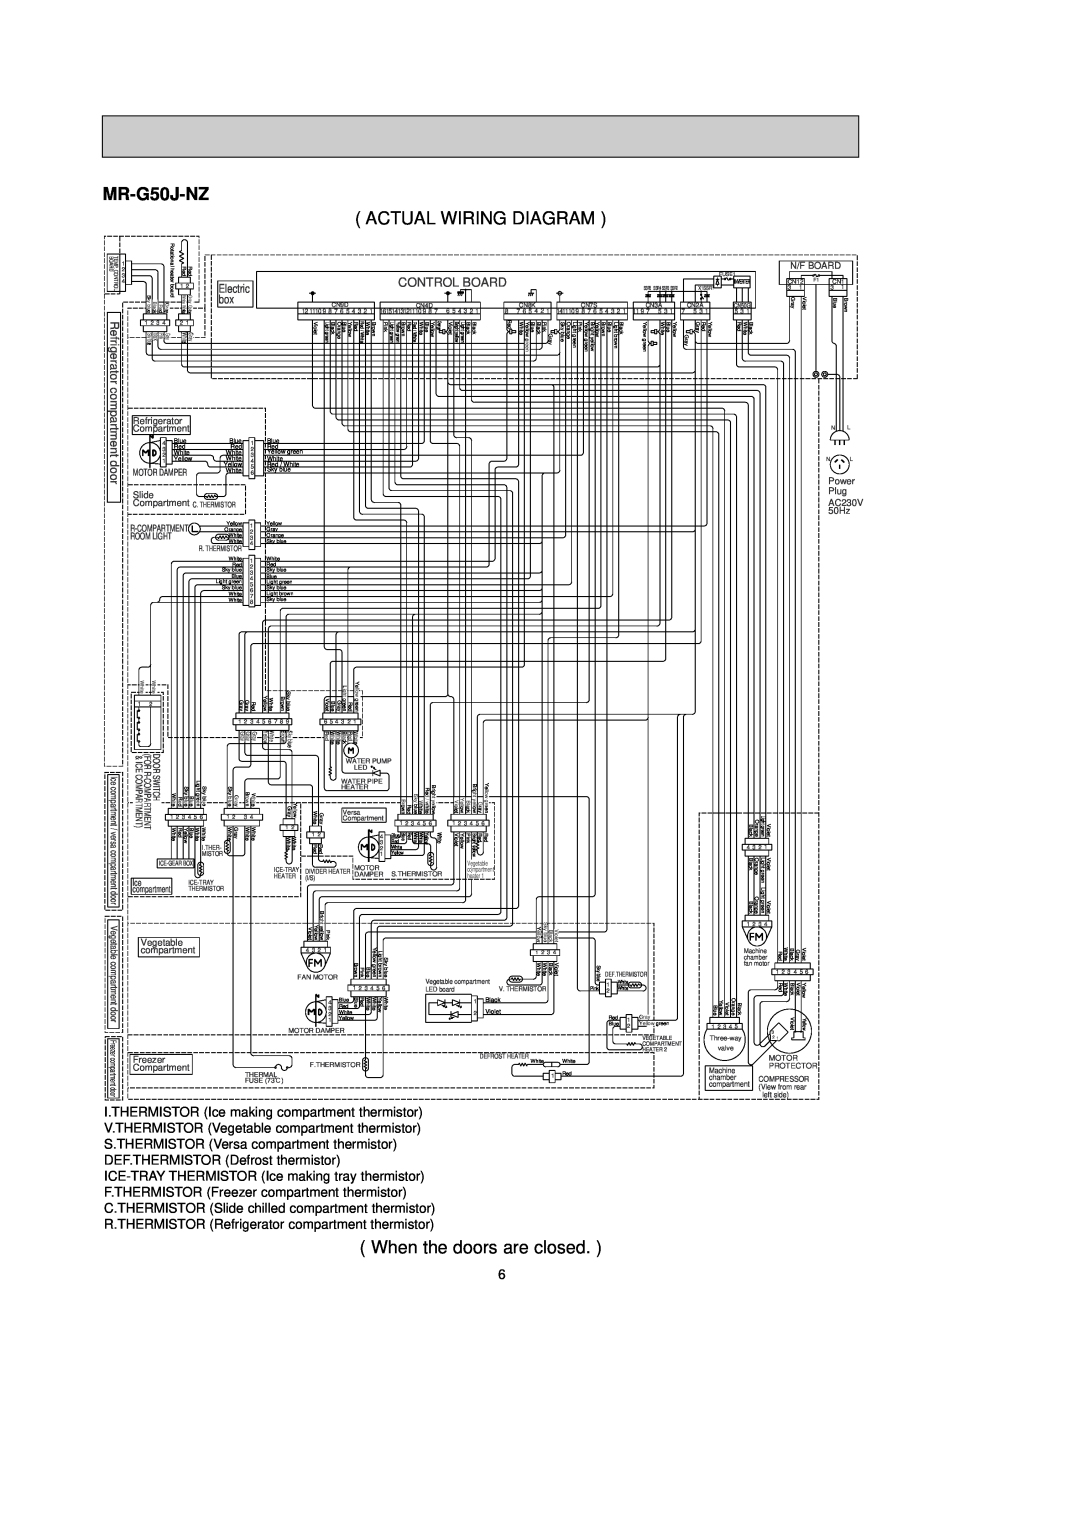 Mitsubishi Electronics MR-G50J-SS-NZ manual Actual Wiring Diagram, MR-G50J-NZ, Refrigerator, Control Board, Electric 